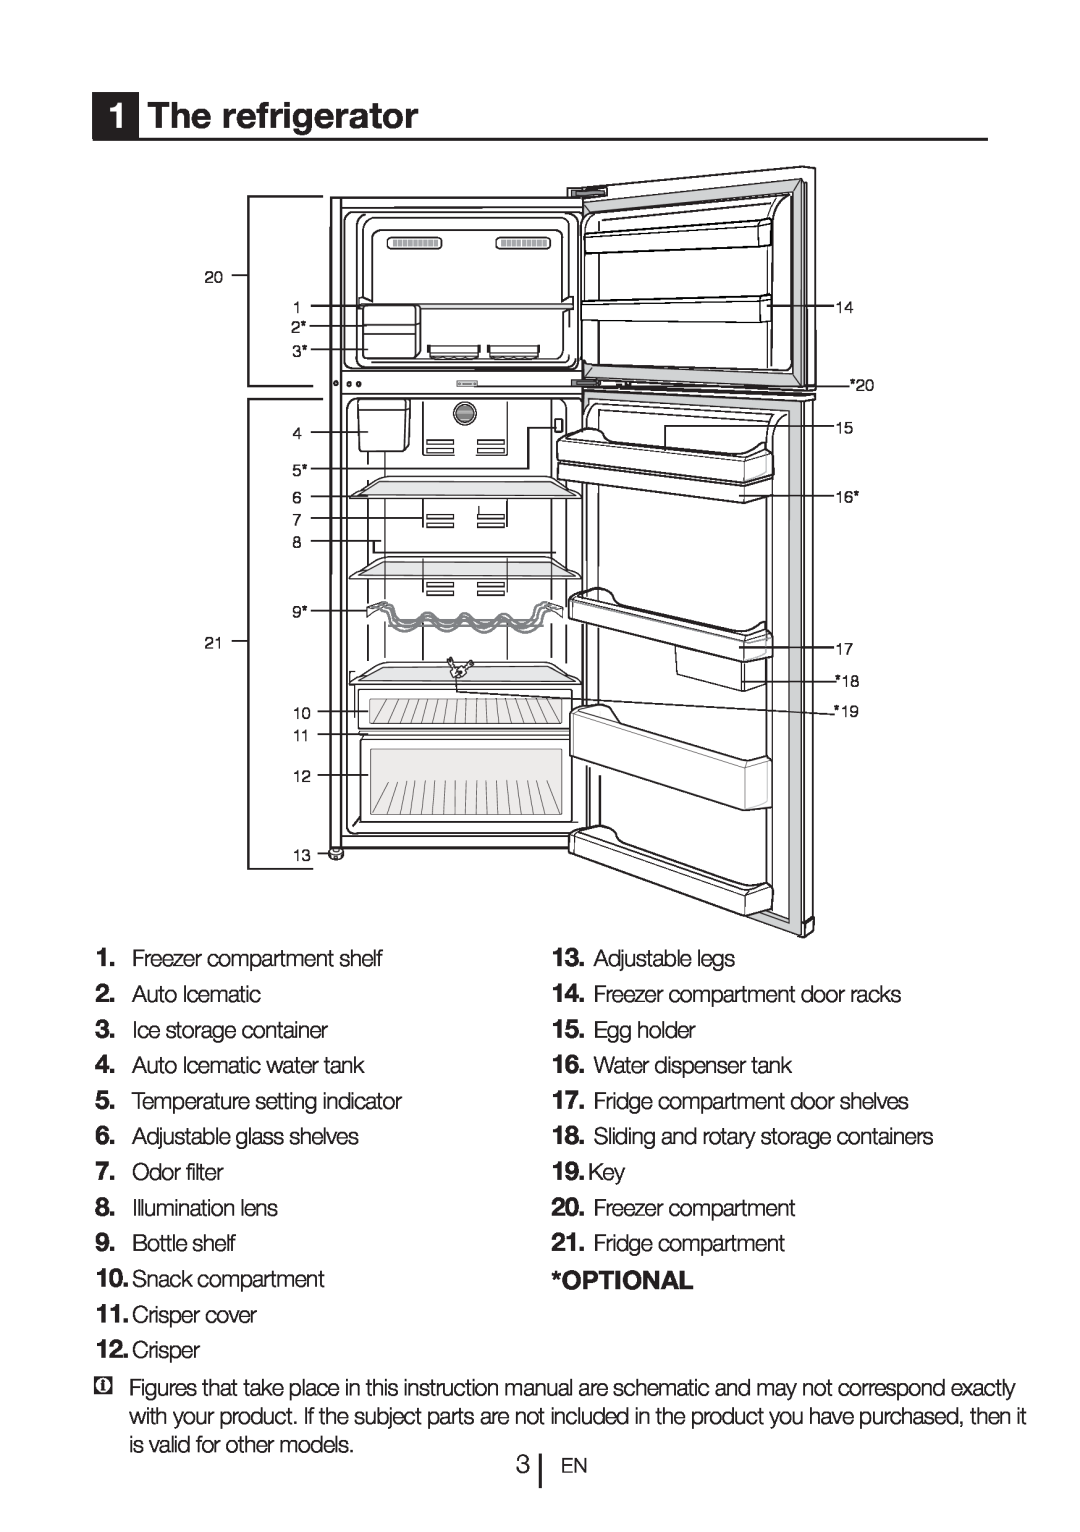 Beko DN151120X manual 1The refrigerator, Key, Optional 